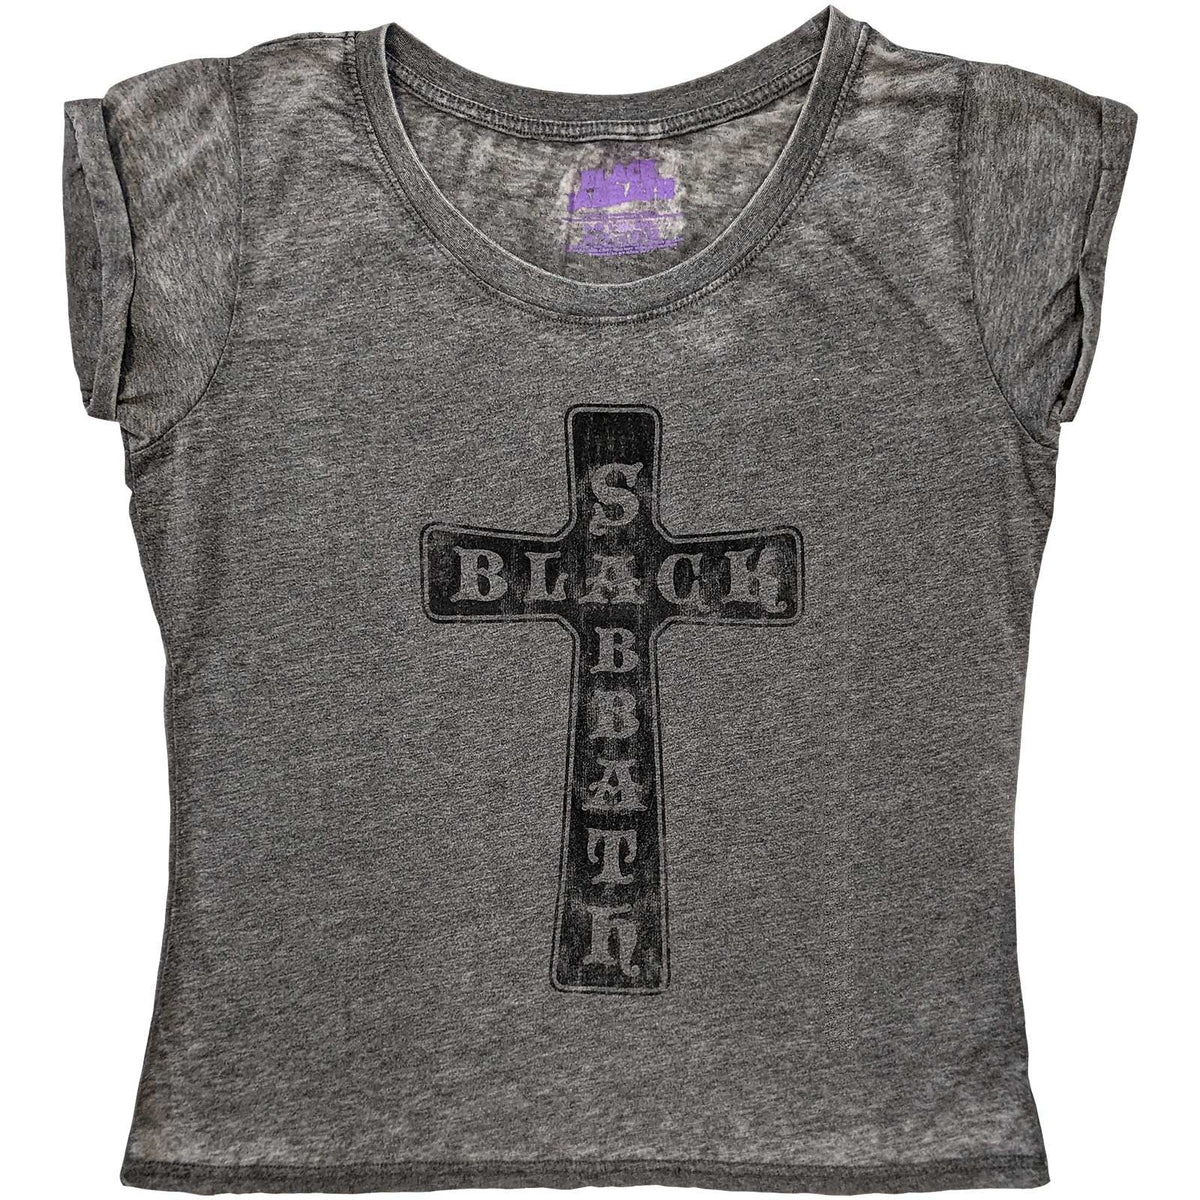 Black Sabbath Ladies T-Shirt - Vintage Cross (Burnout)- Official Licensed Design